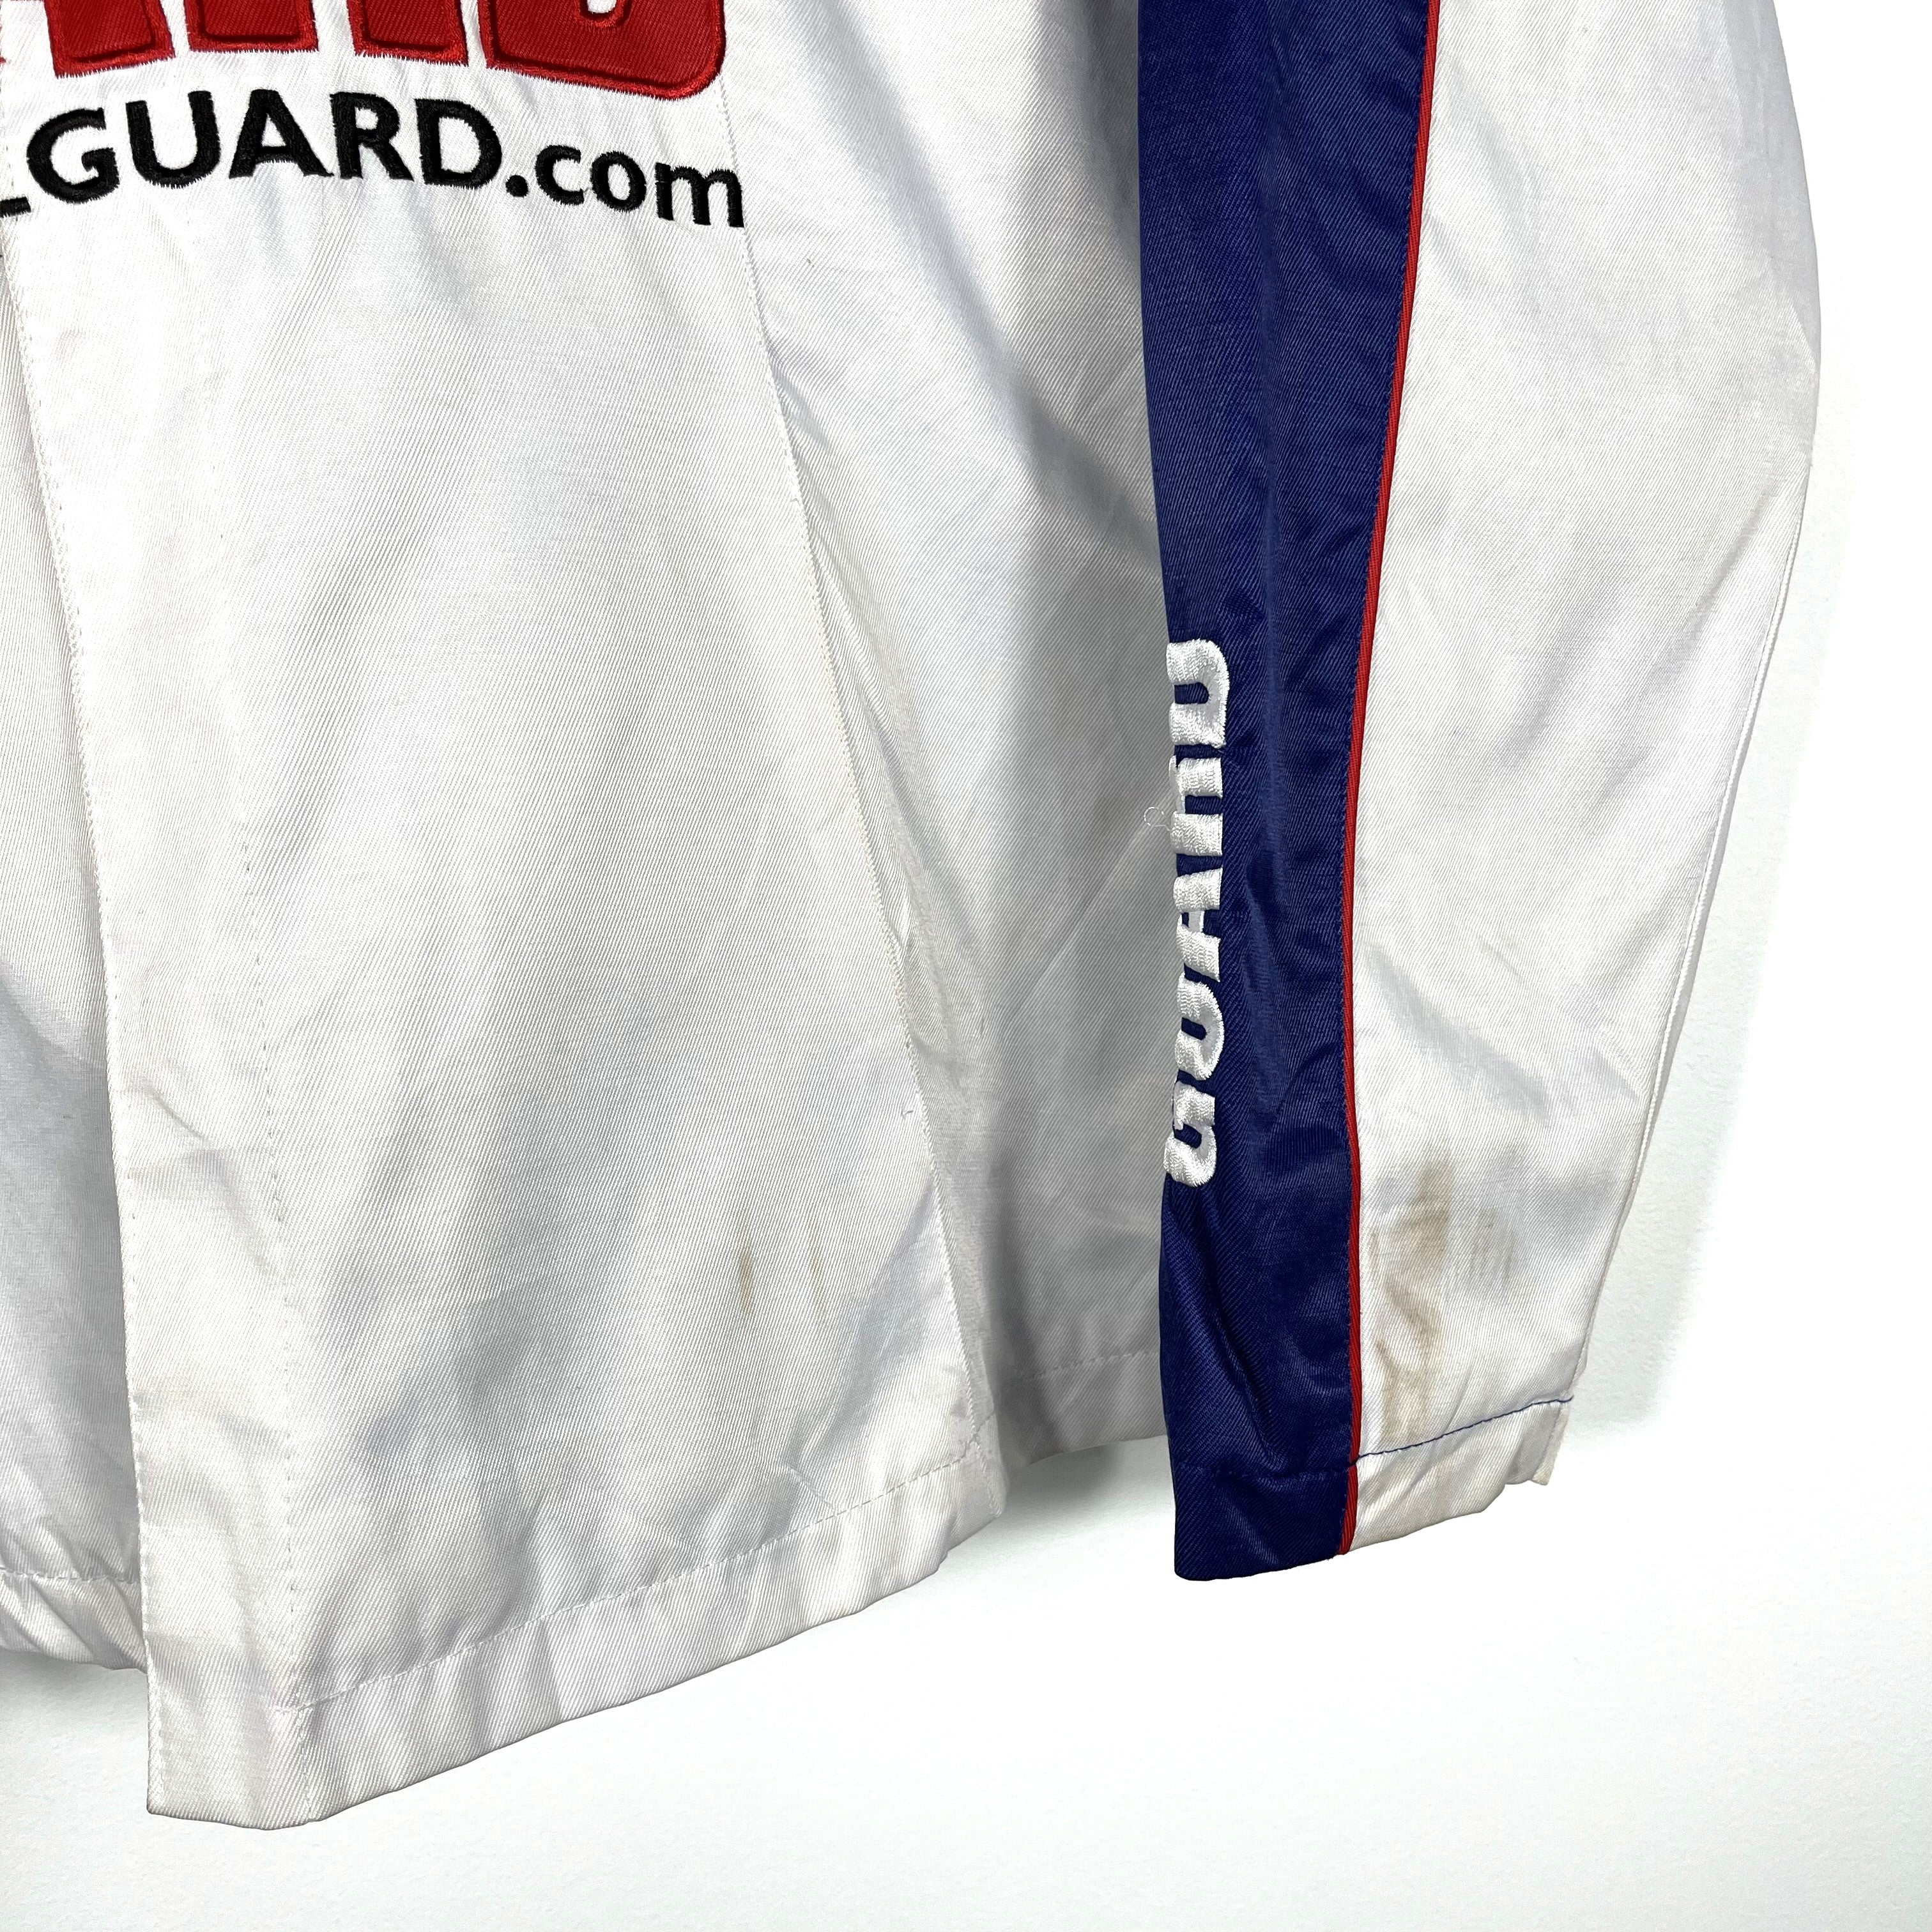 Vintage Nascar National Guard Racing Jacket - Women's XL